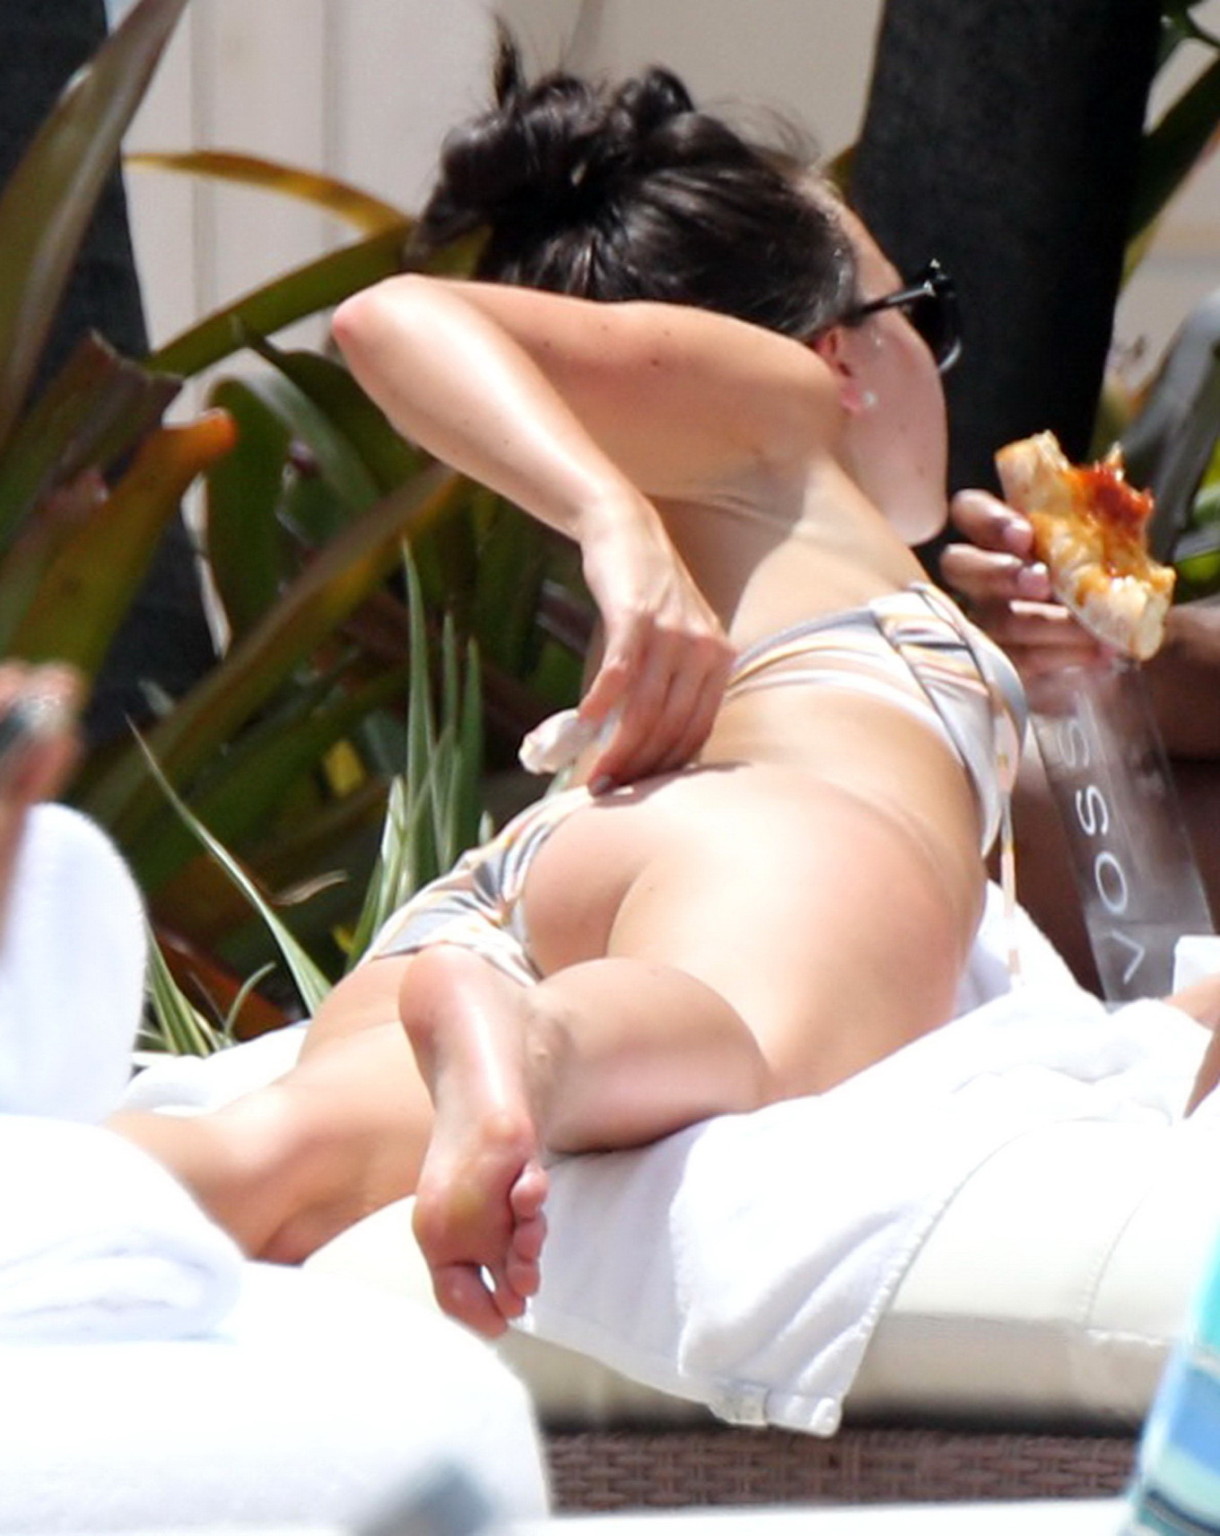 Louisa lytton mostrando su trasero en bikini en la piscina del hotel en miami
 #75229670